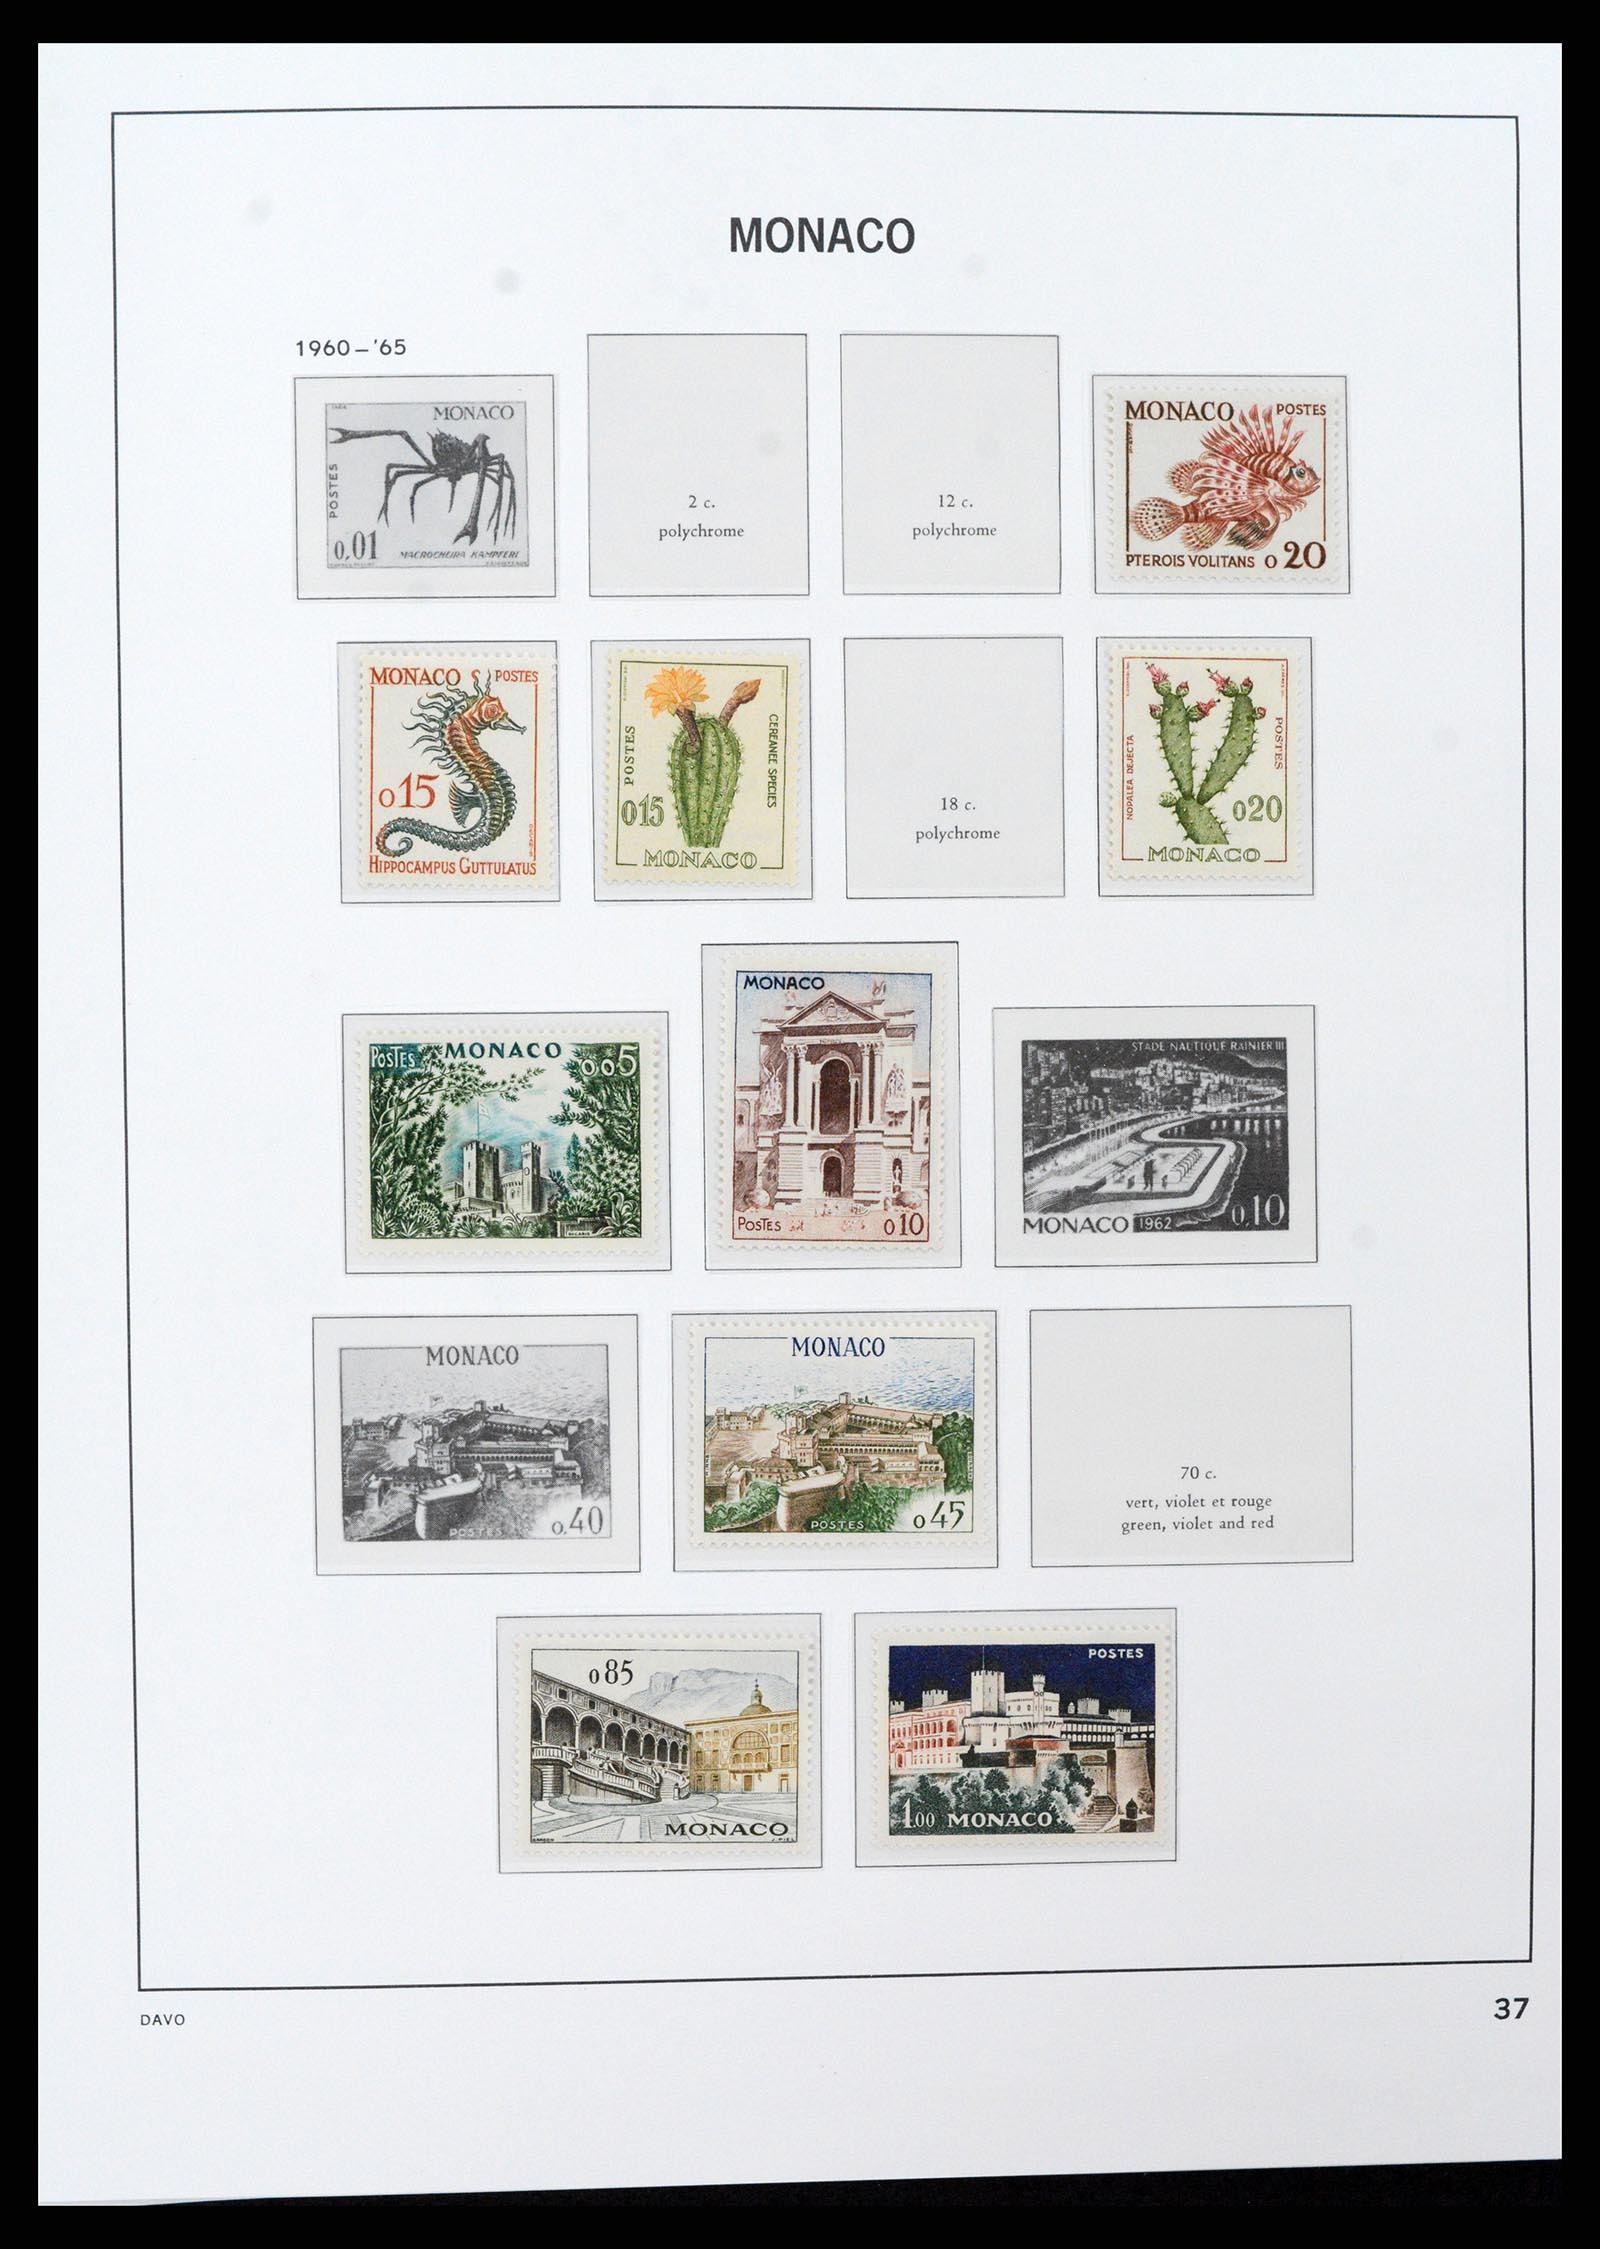 37279 037 - Stamp collection 37279 Monaco 1885-1969.